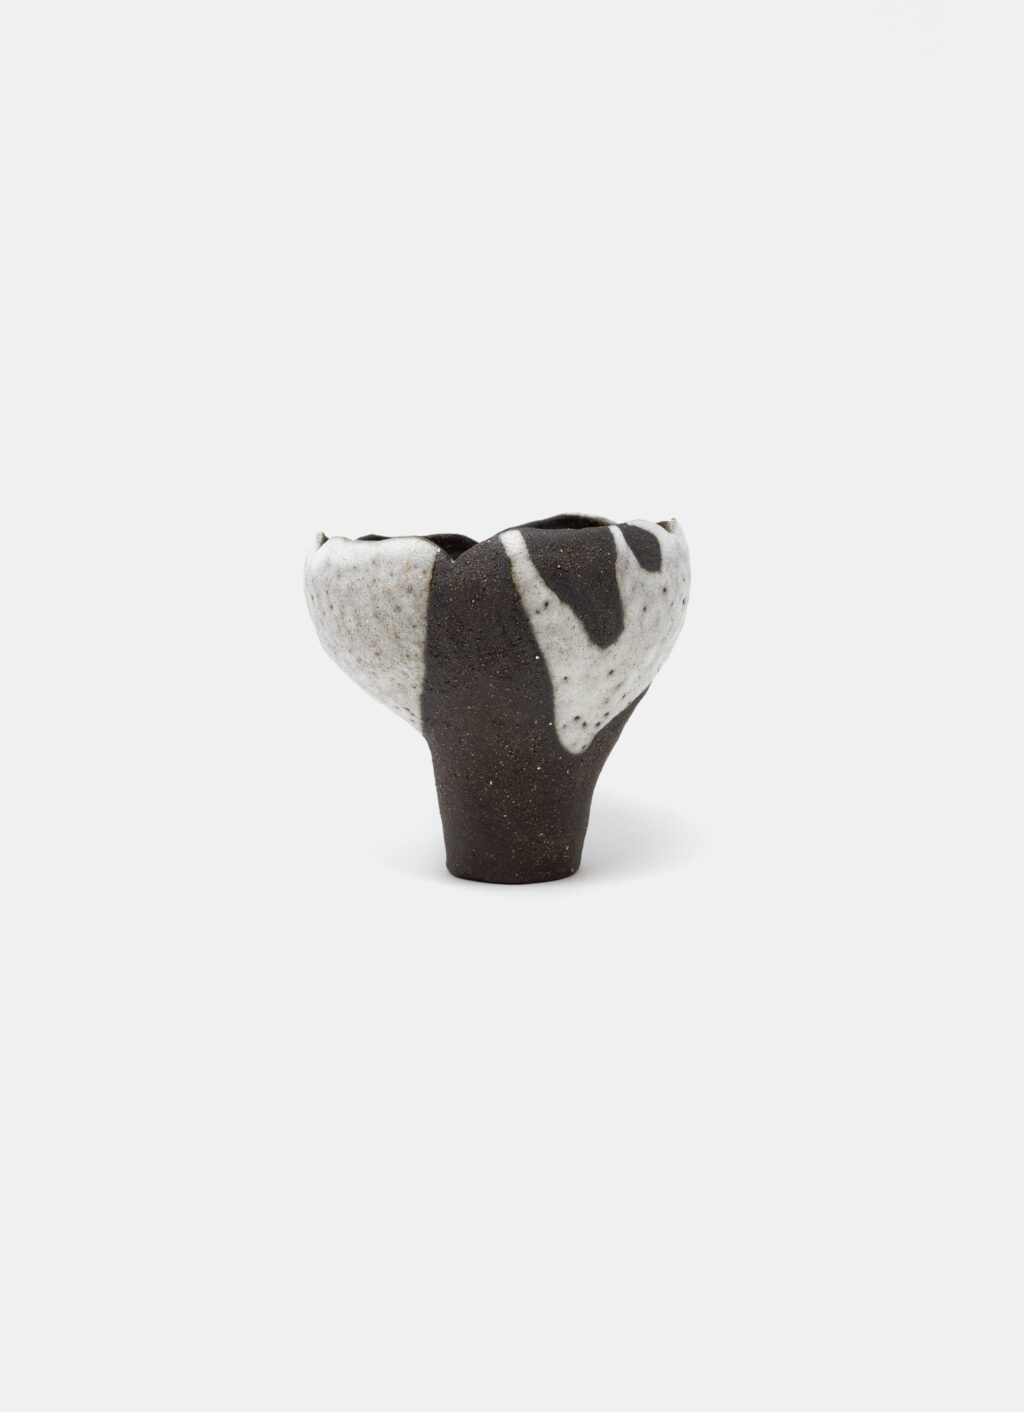 Mano Mani - Ikebana Vase - Dark Stoneware and white glaze - 2